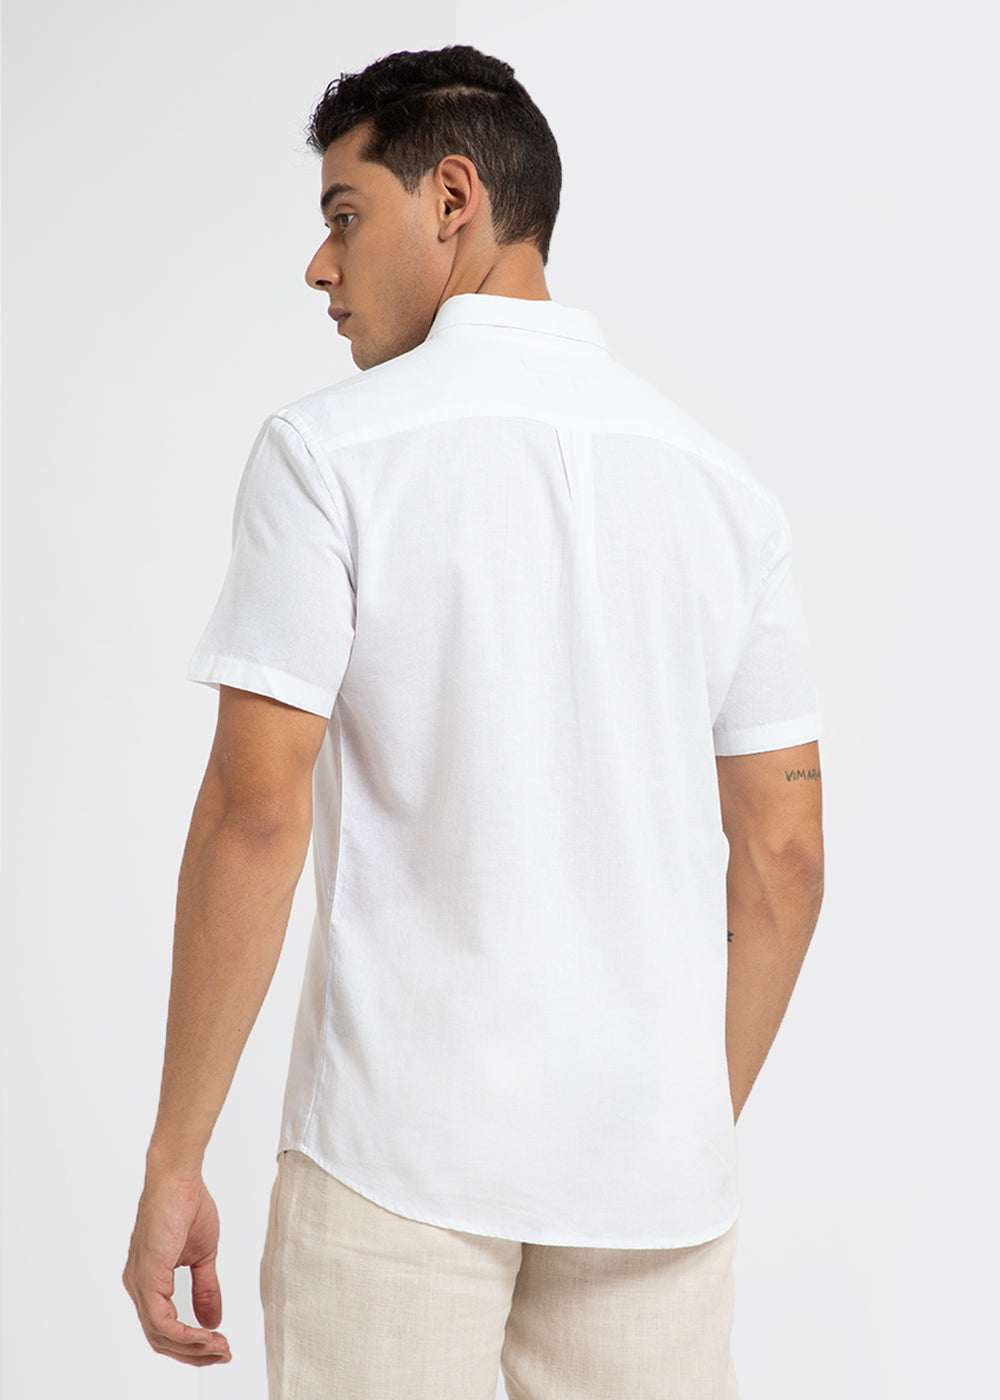 Frost White Cotton Linen Shirt